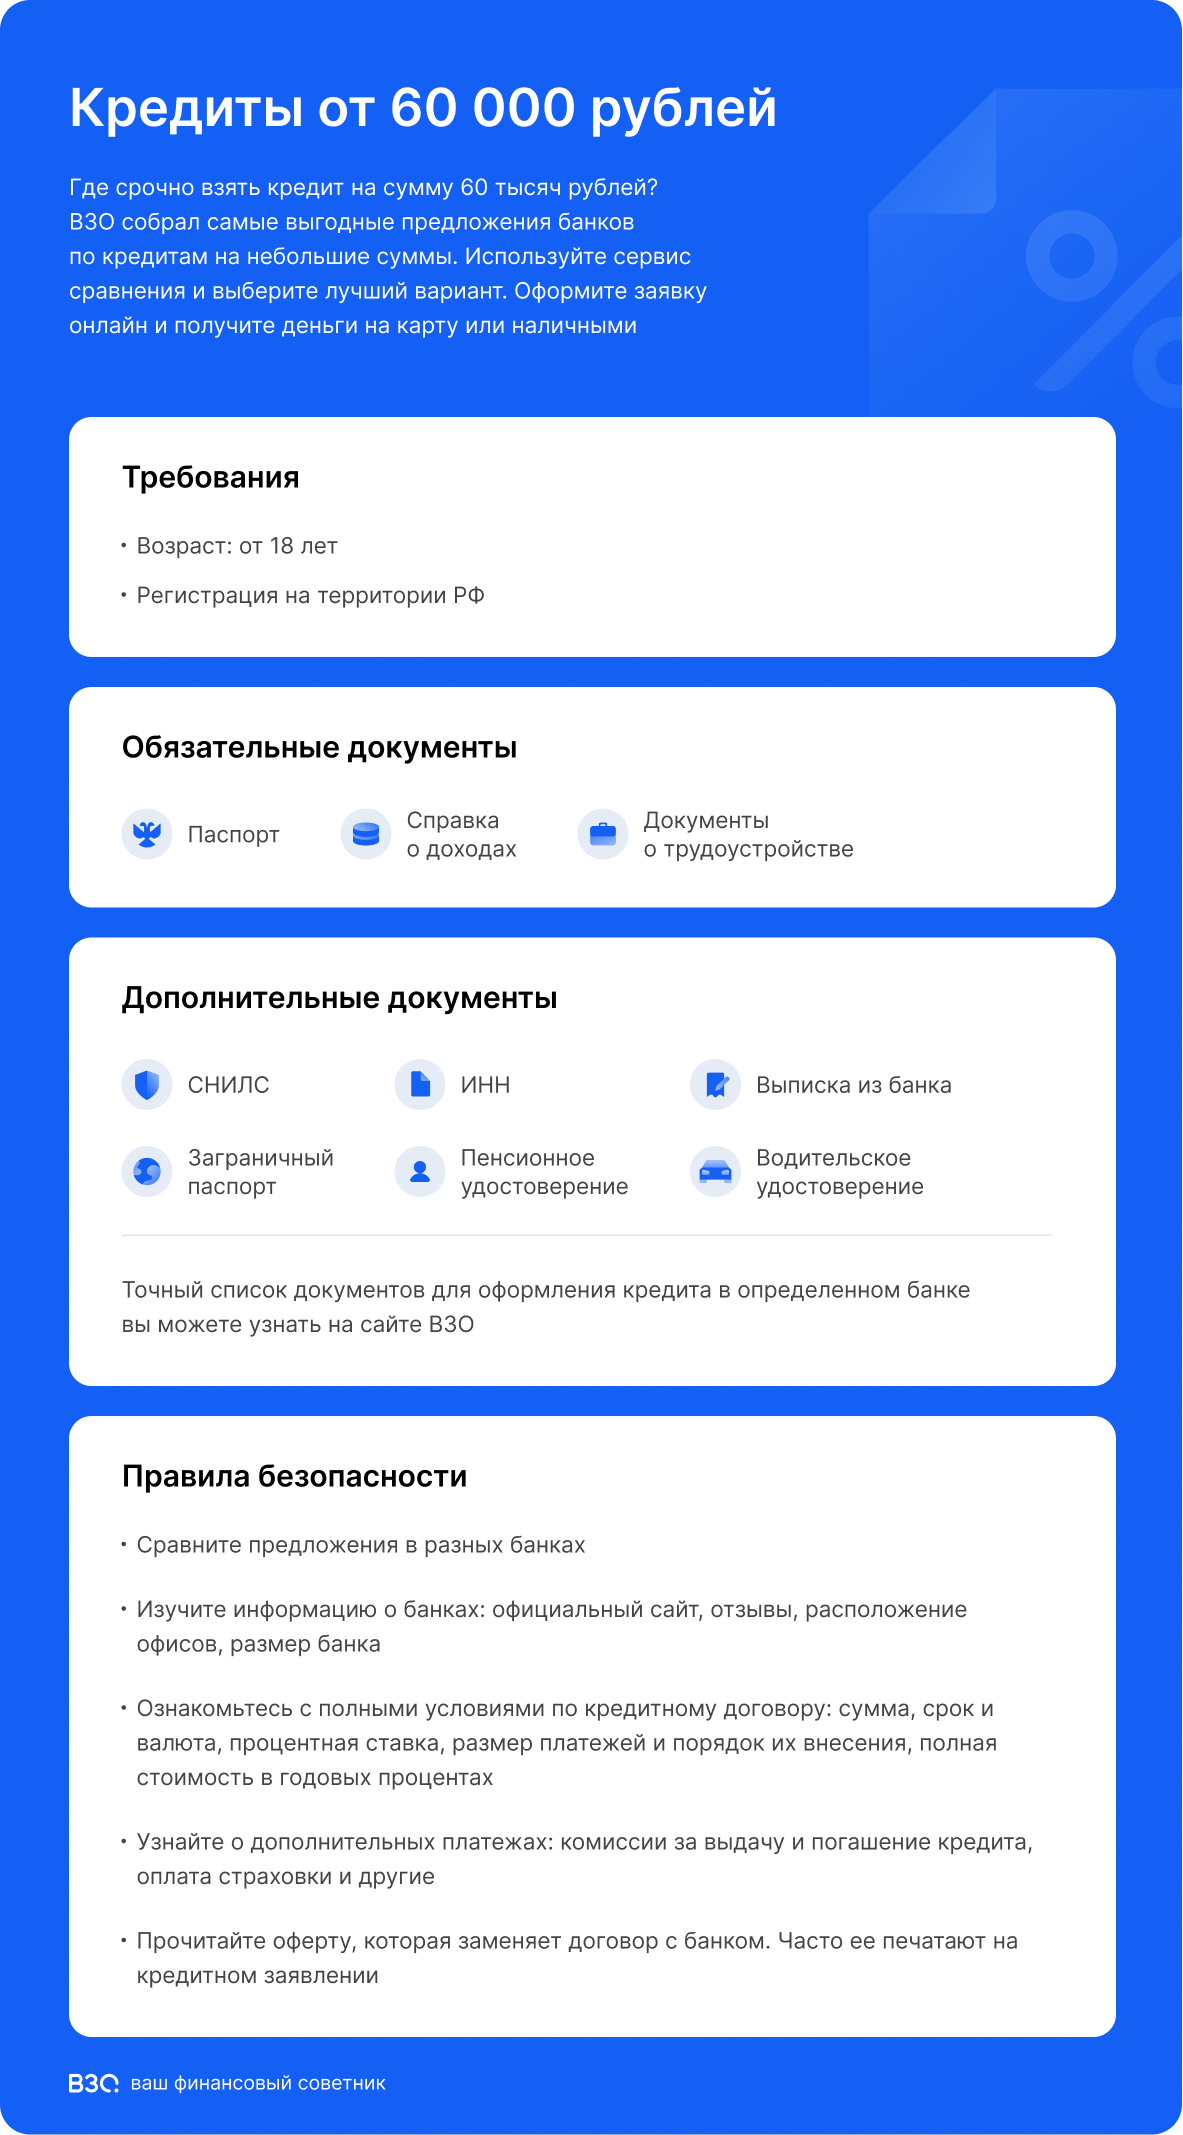 Кредиты от 60 000 рублей онлайн инфографика